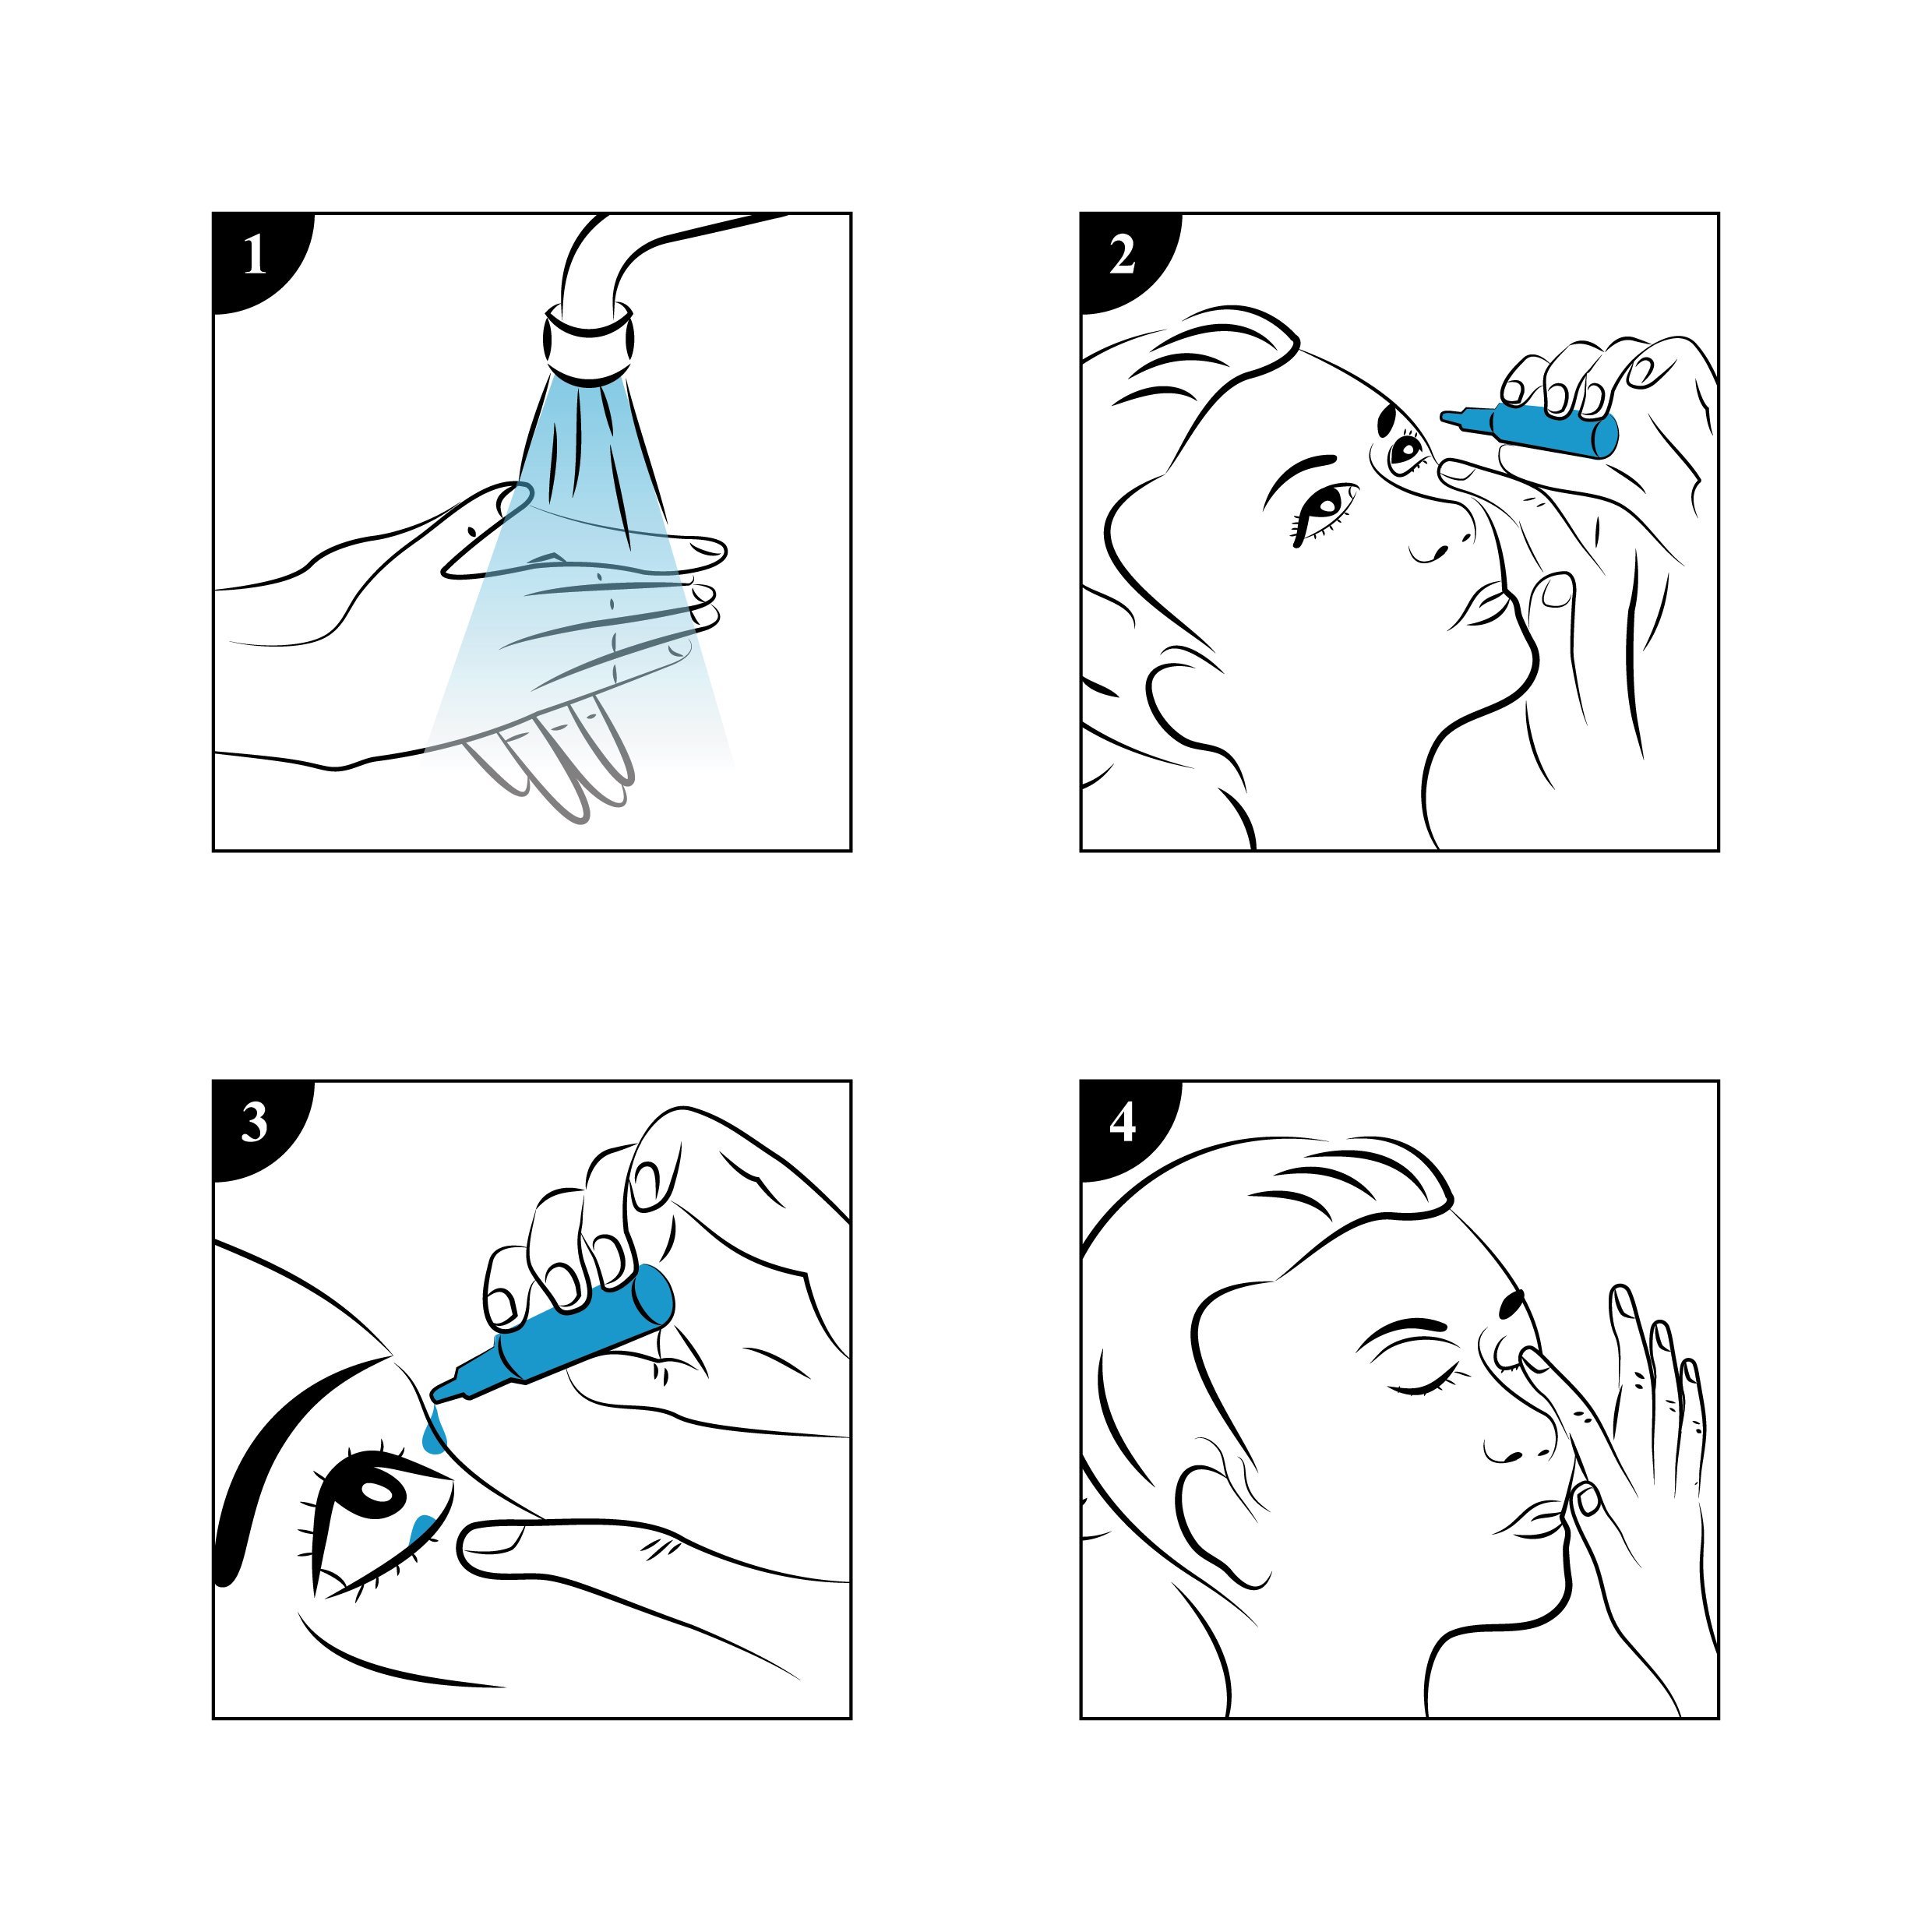 Rycina 1. Schemat stosowaniu kropli do oczu. (fot. Shutterstock)